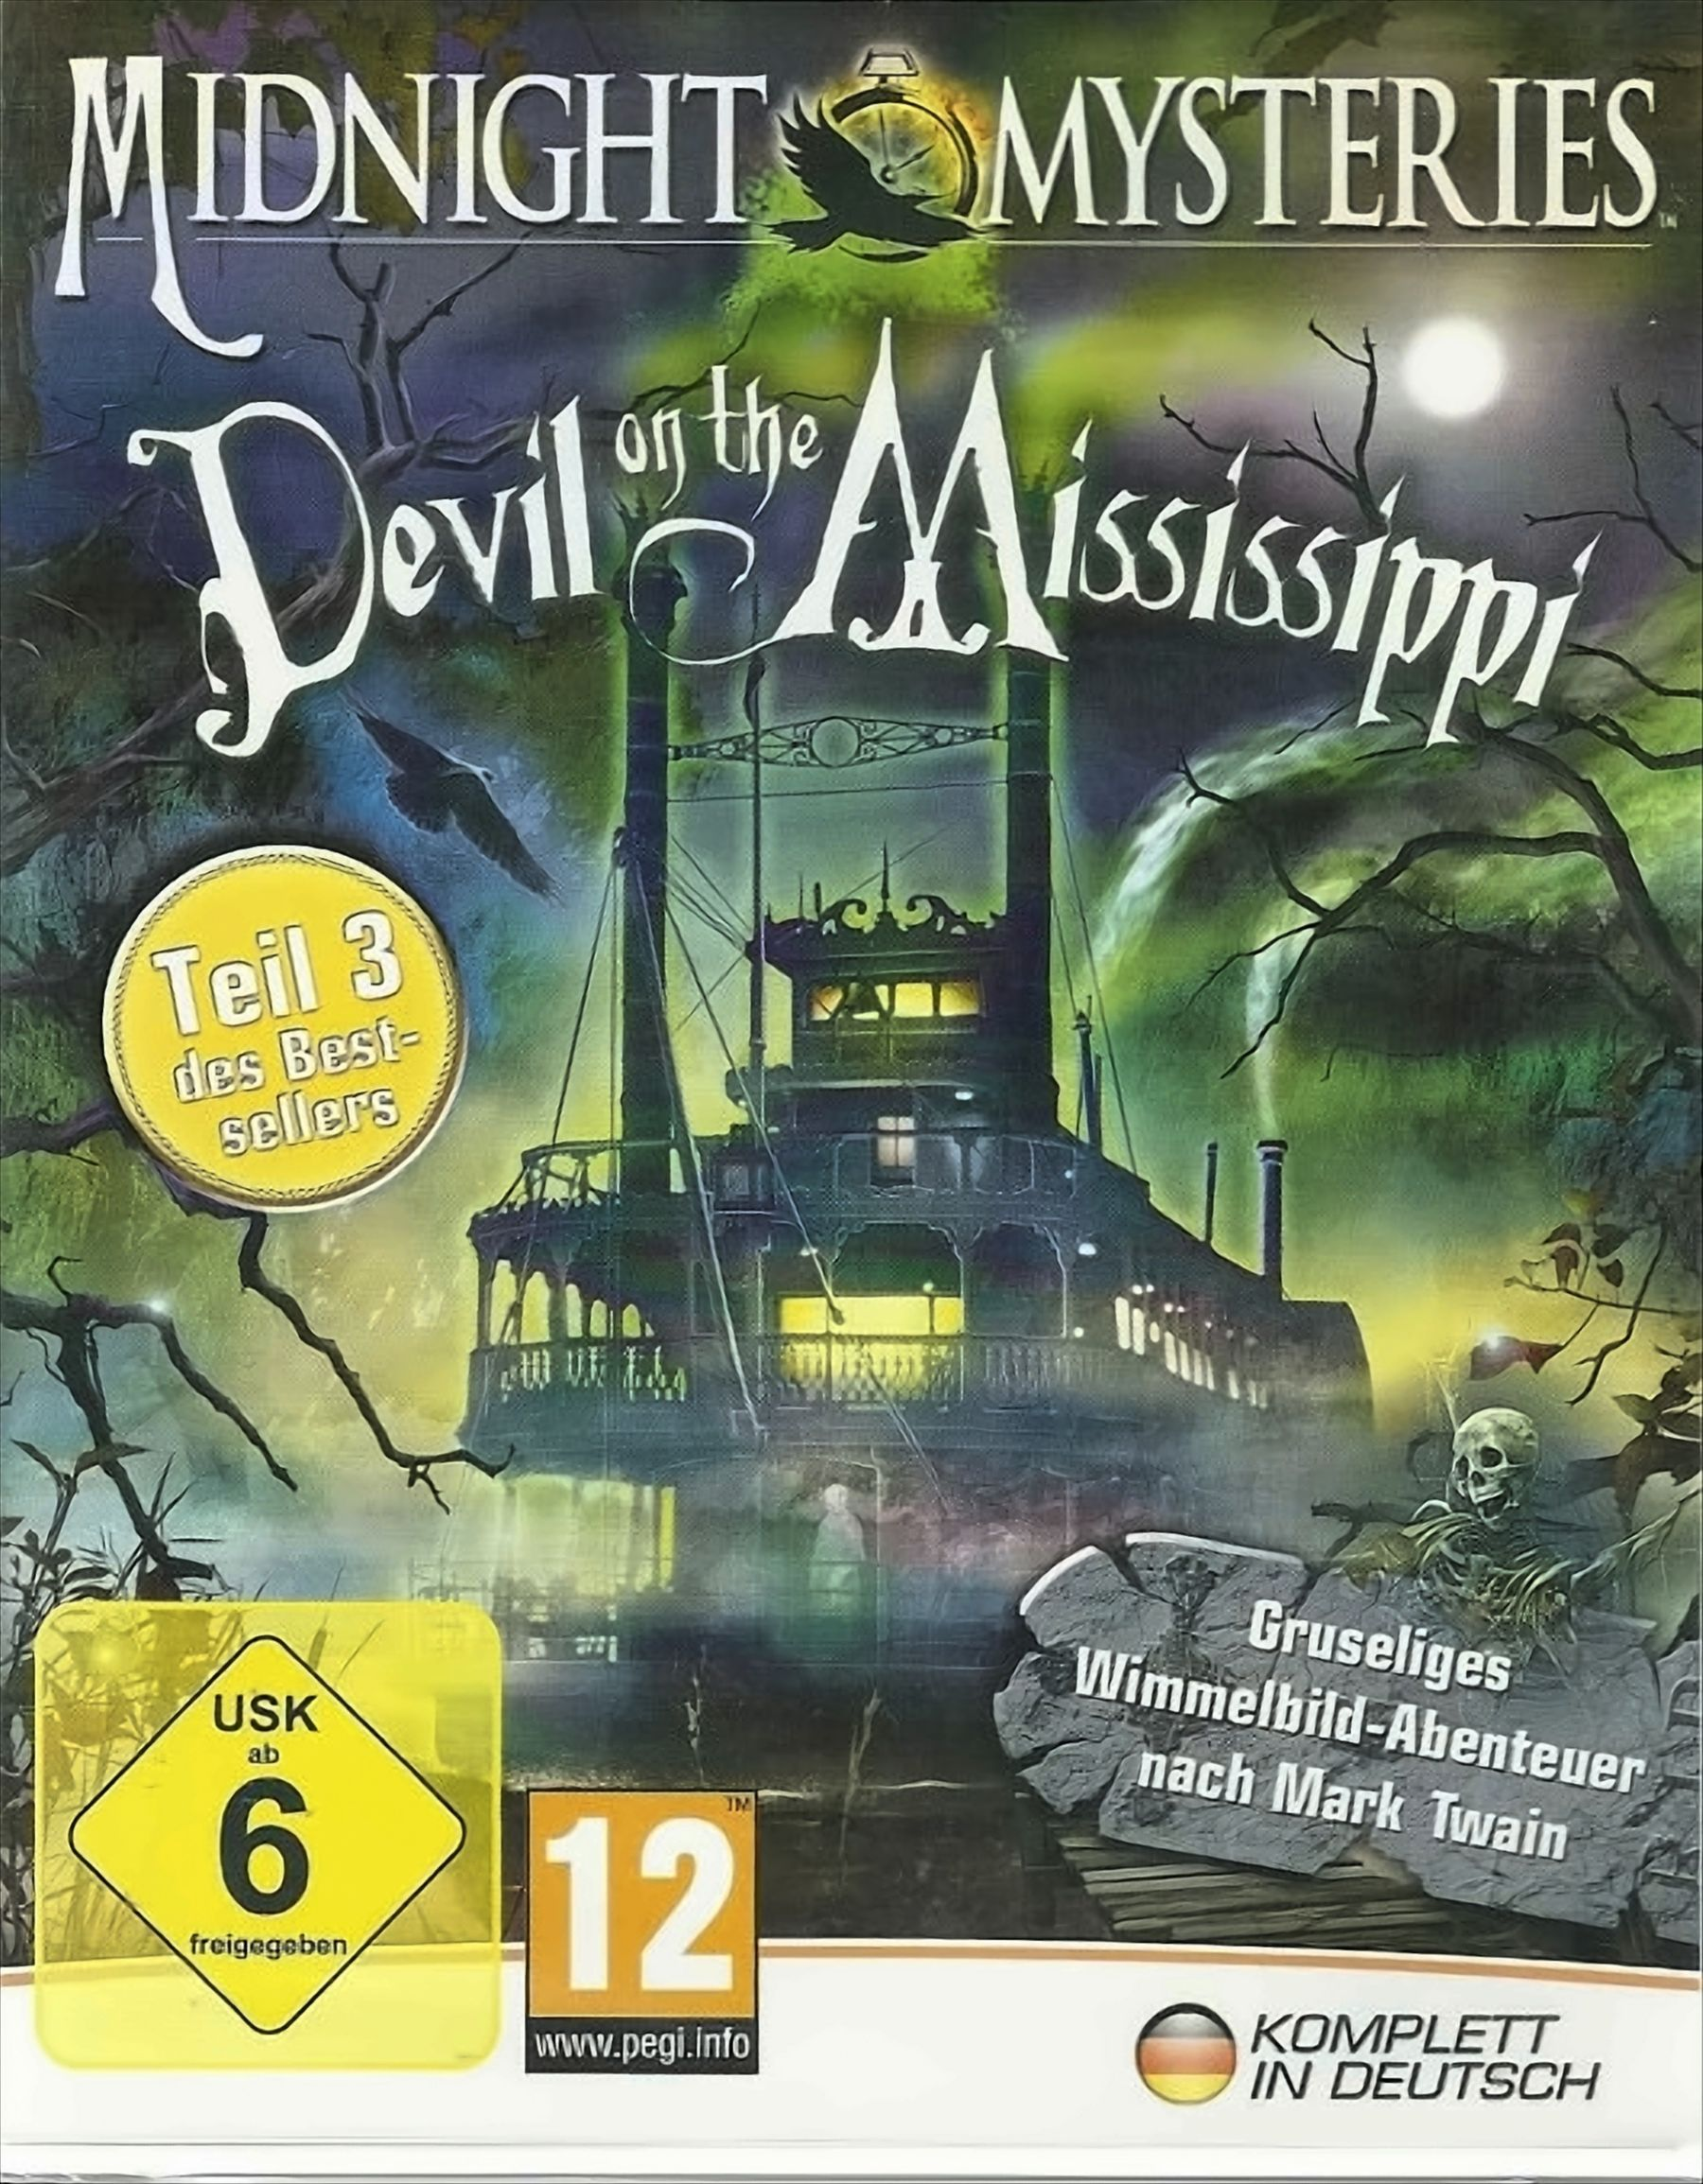 Midnight Mysteries: Devil On Mississippi - The [PC